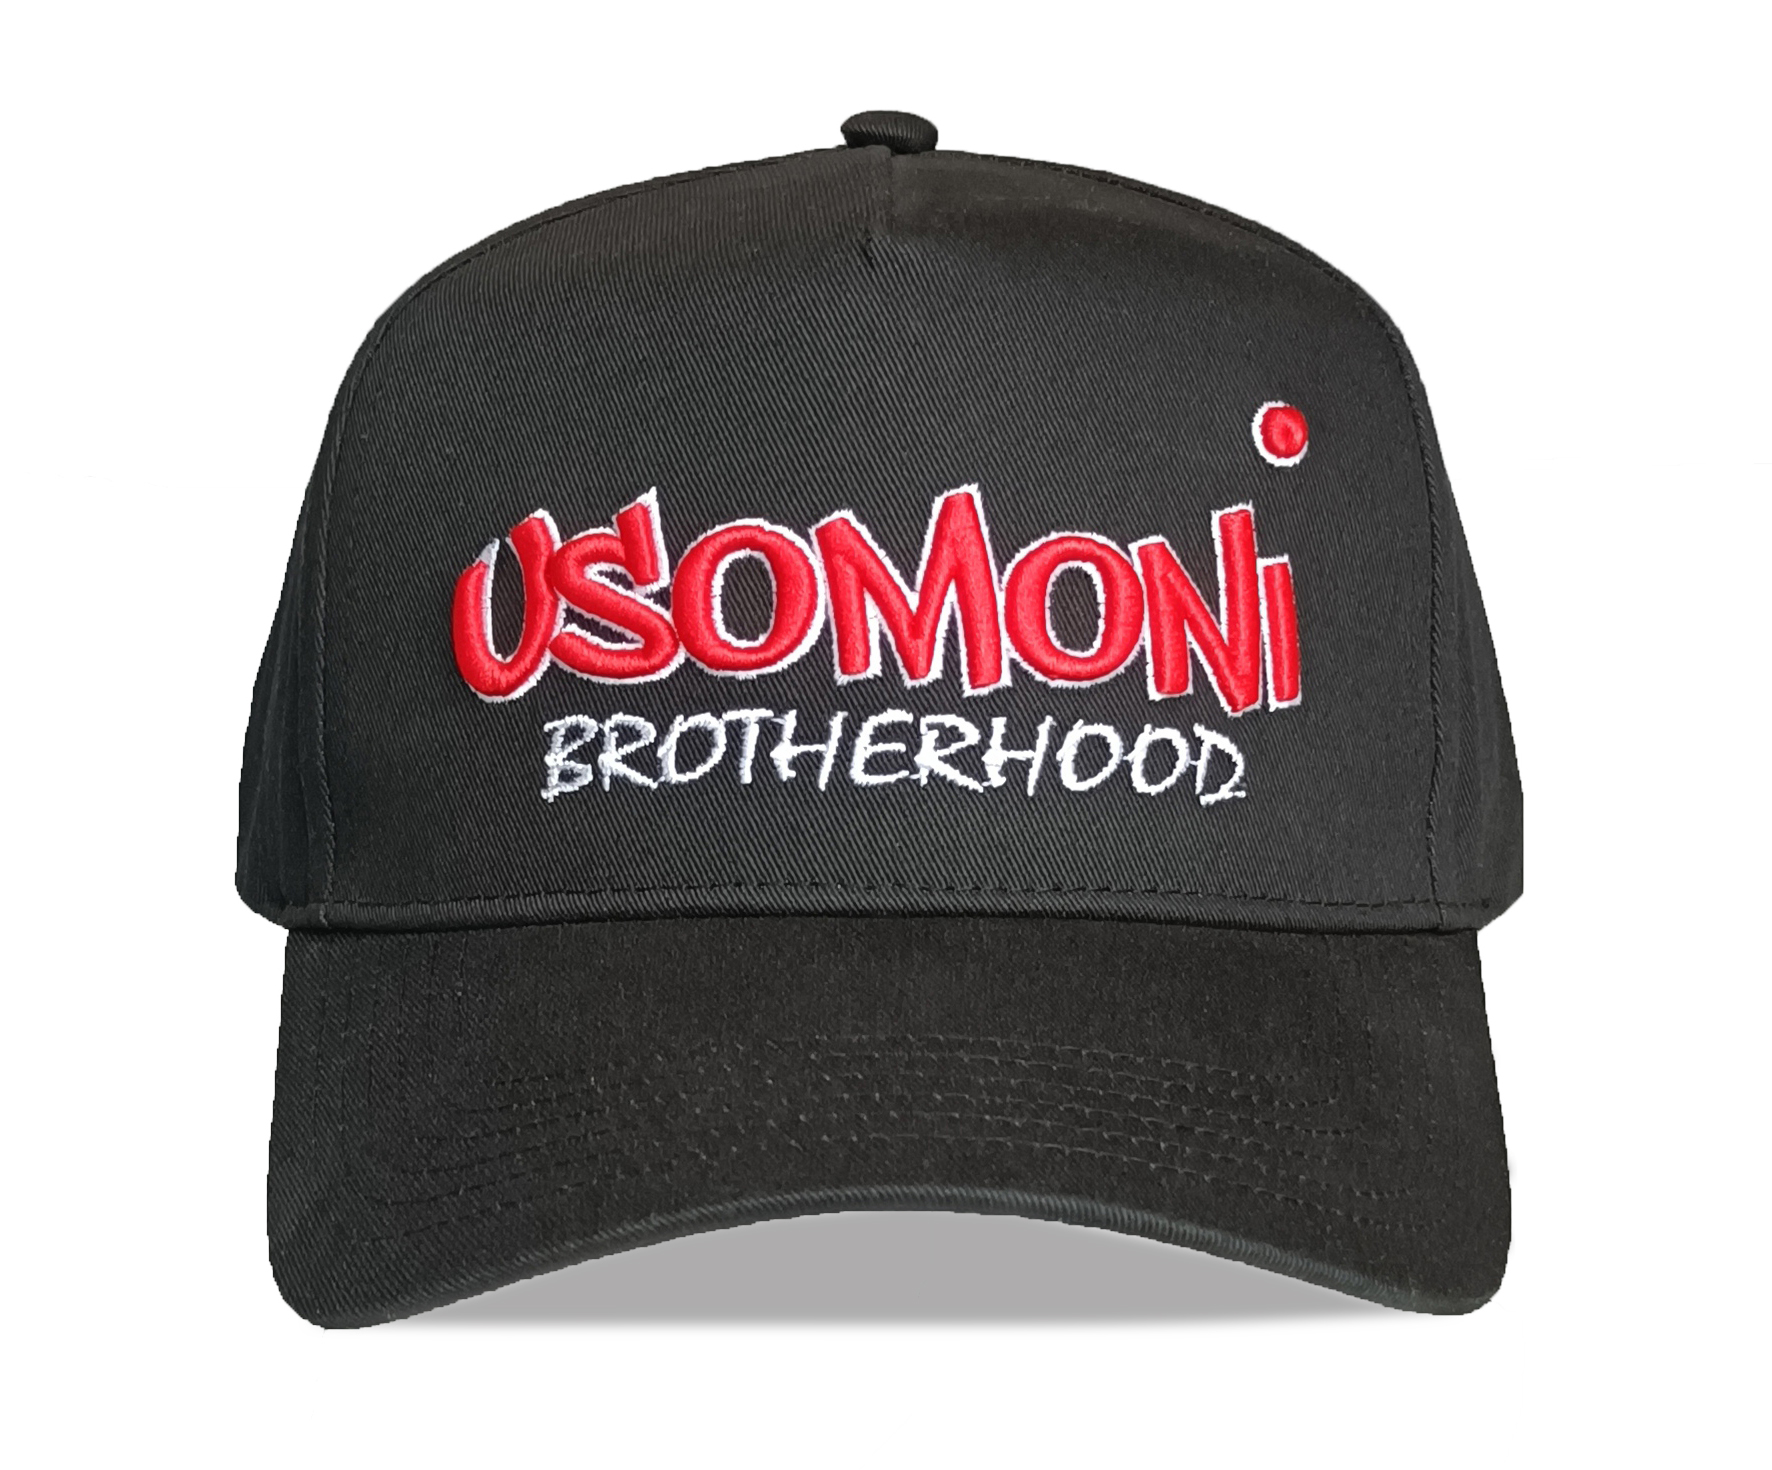 Custom black baseball cap with 3D embroidery logo